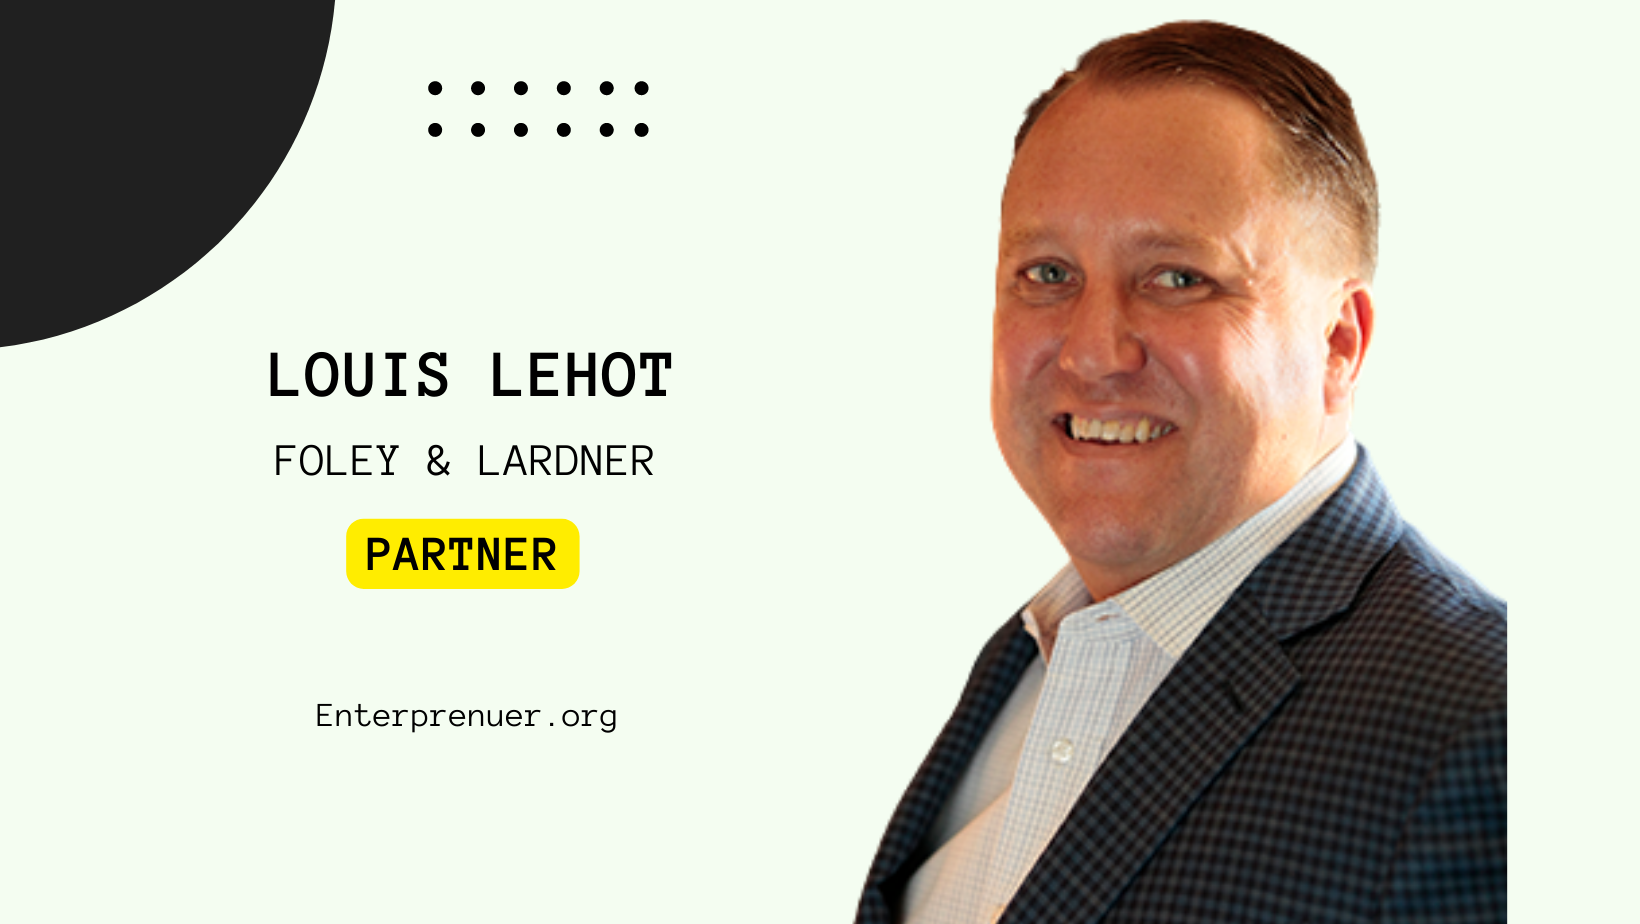 Louis Lehot Partner at Foley & Lardner